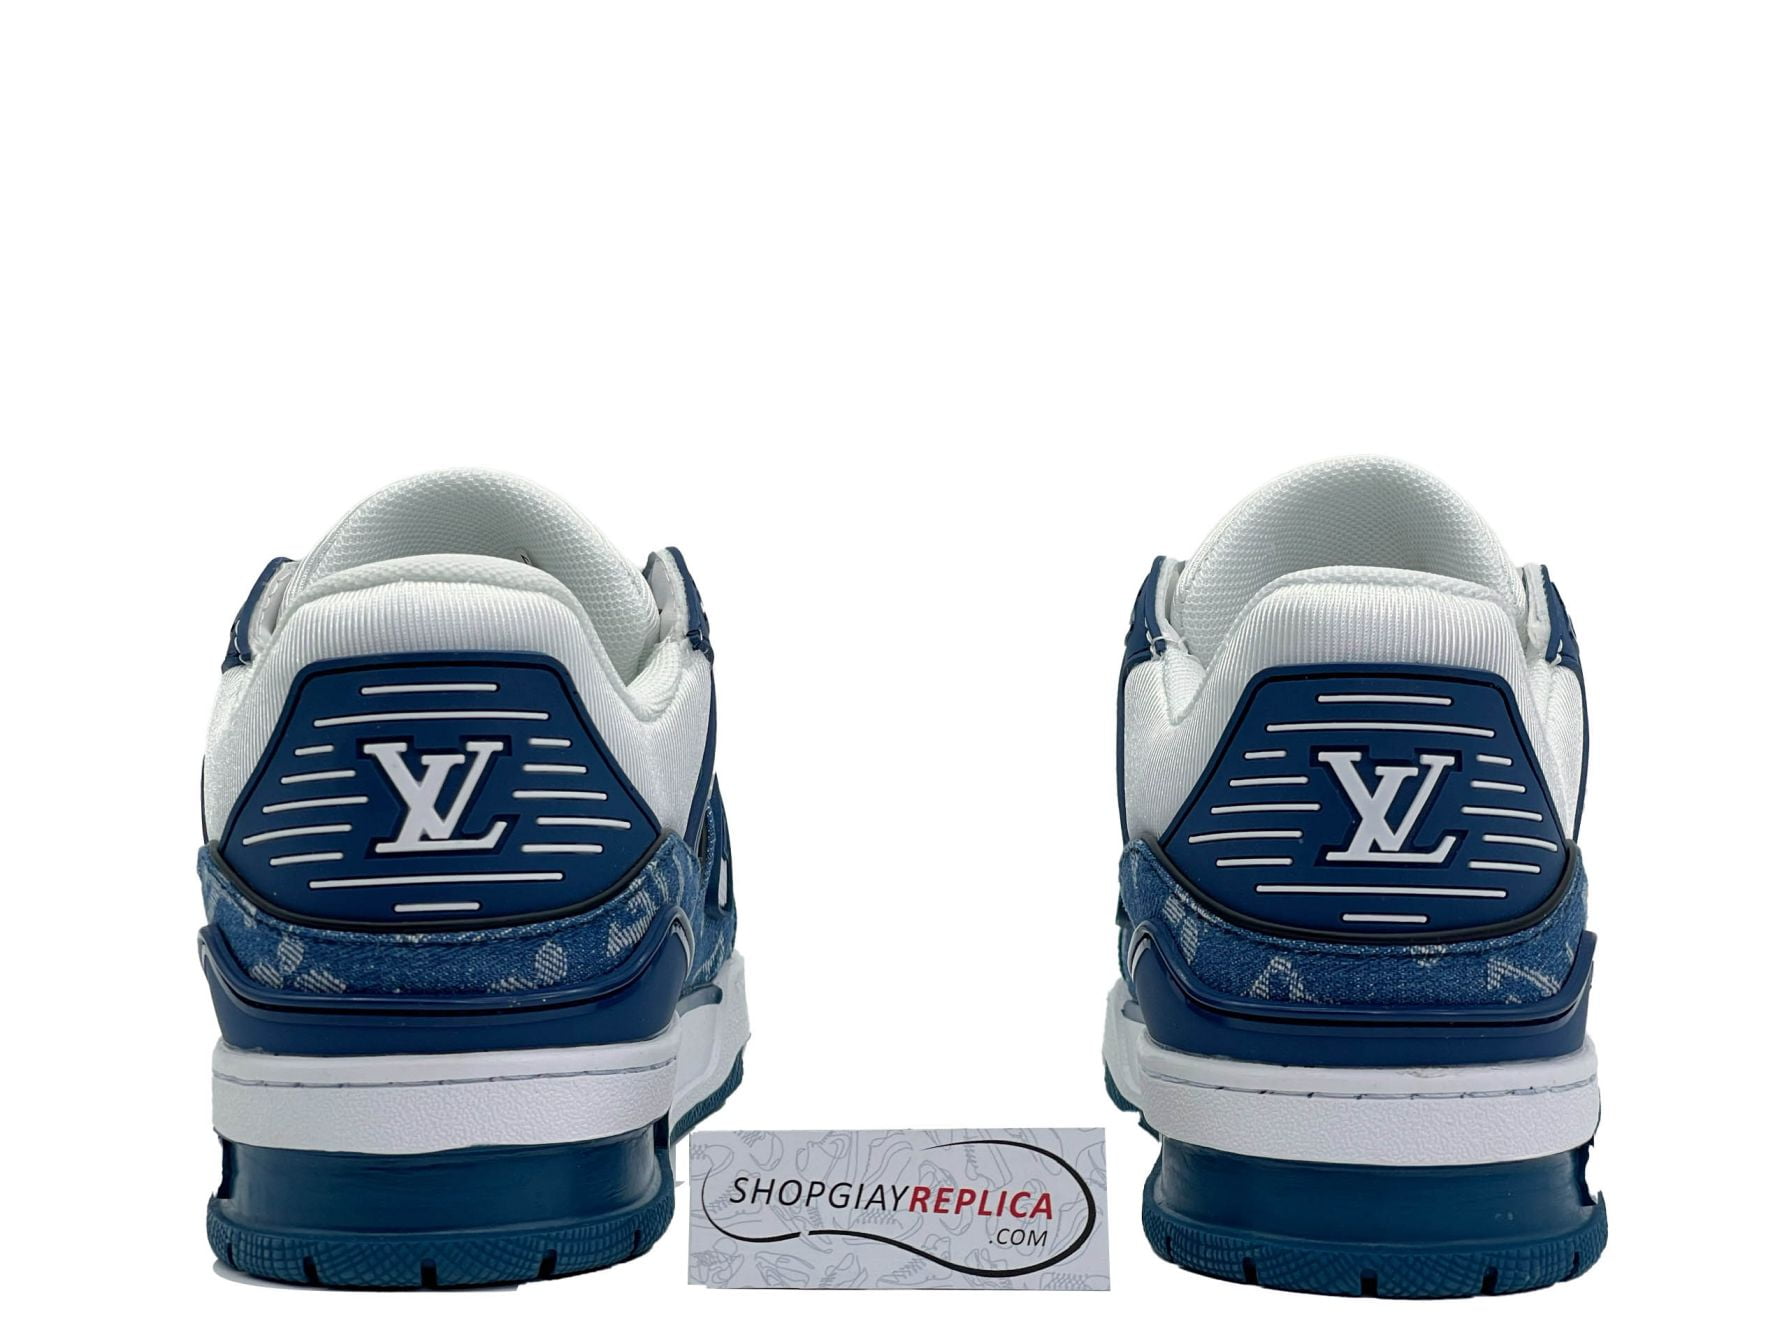 Giày Louis Vuitton LV Trainer Monogram Denim White Blue Siêu Cấp replica 1:1